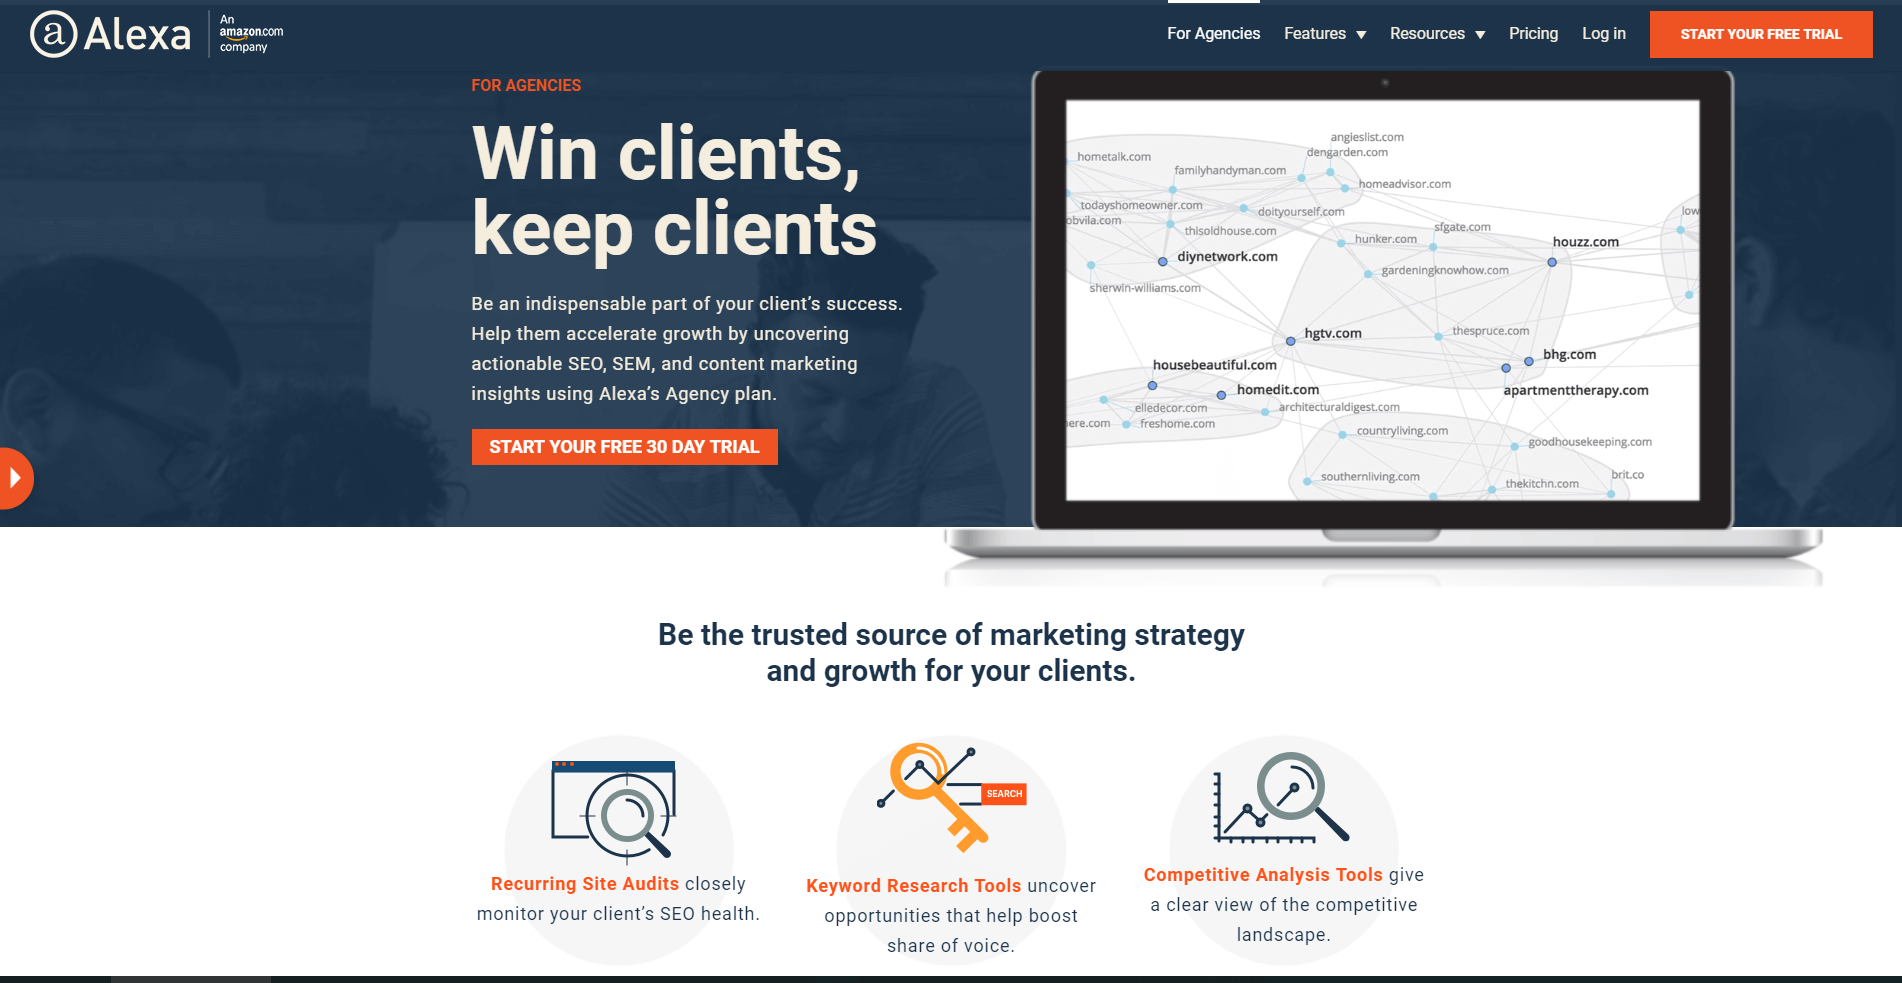 Alexa - win clients, keep clients